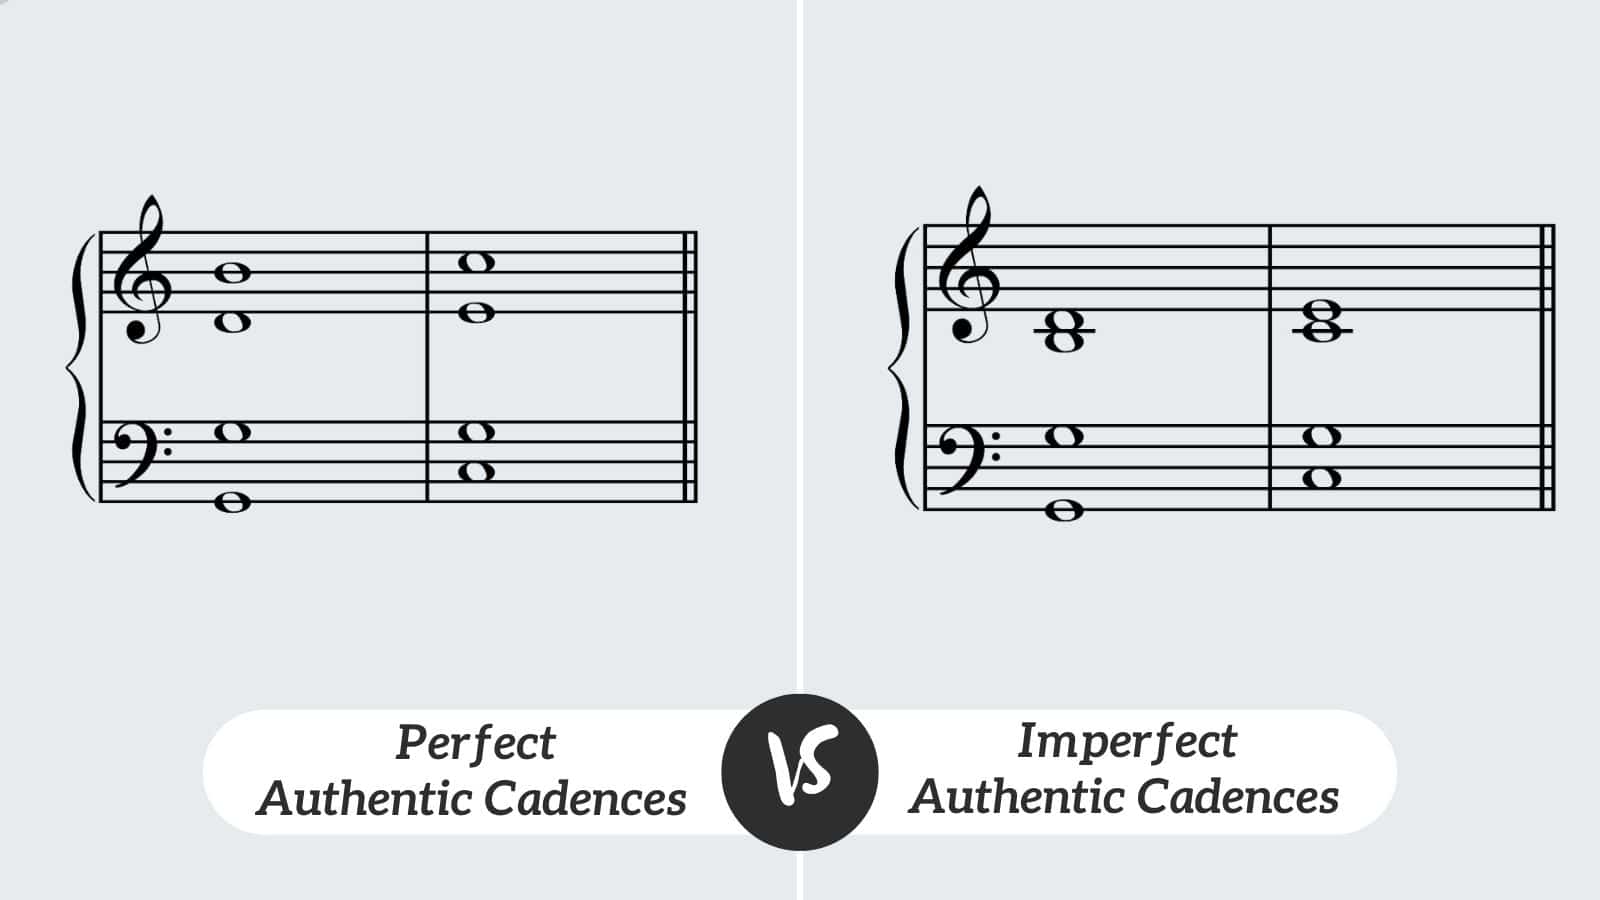 Perfect vs Imperfect Authentic Cadences